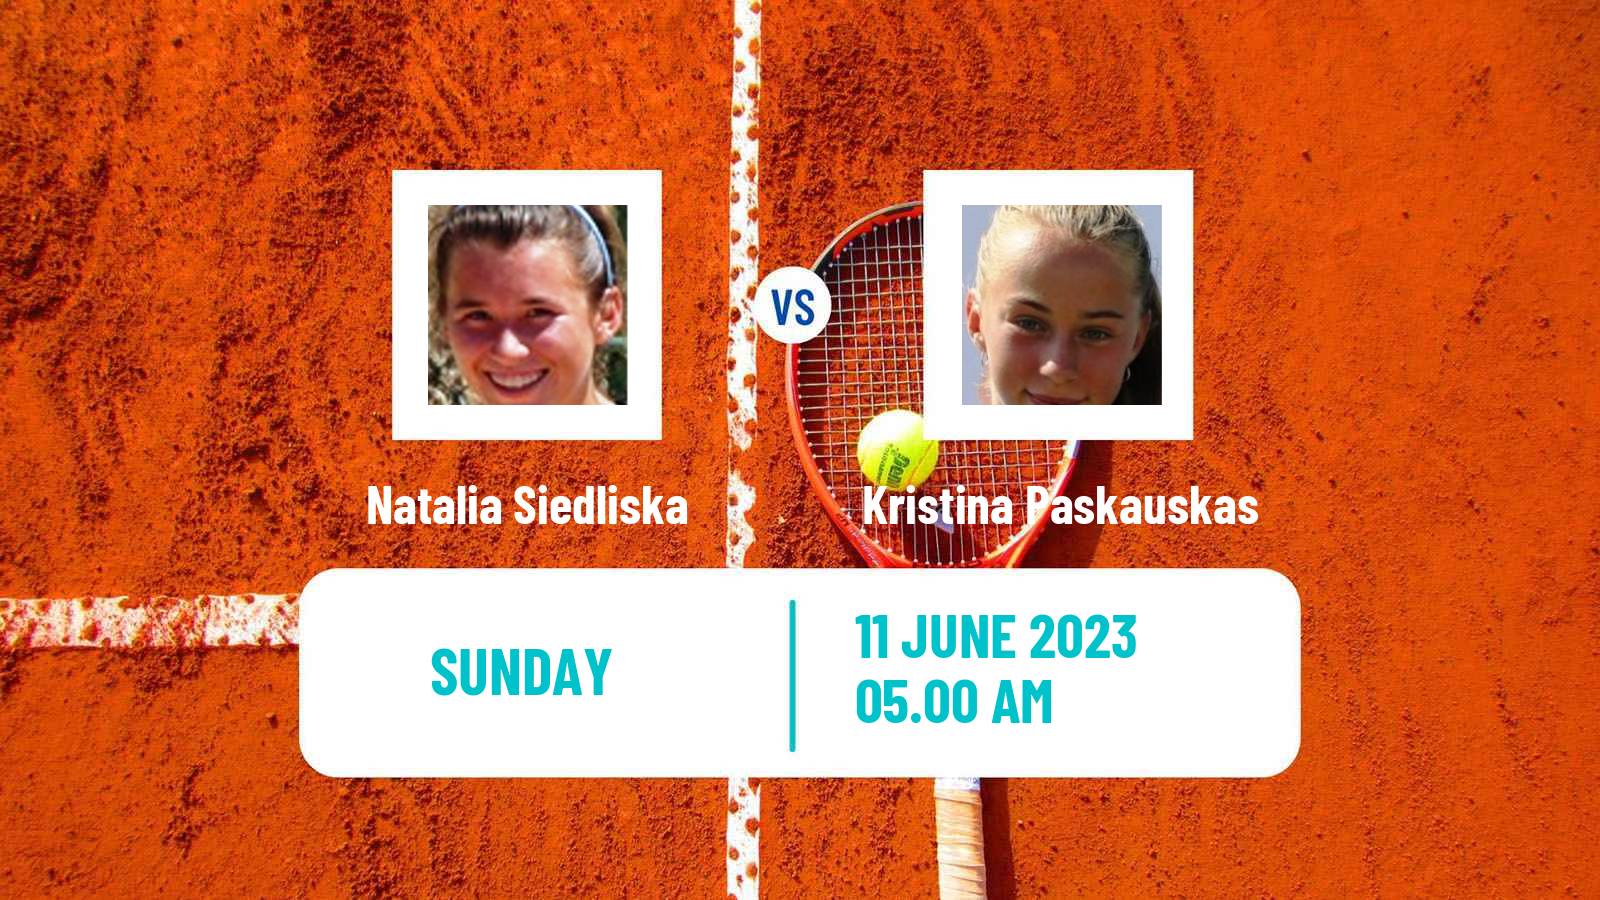 Tennis ITF W15 Monastir 18 Women Natalia Siedliska - Kristina Paskauskas